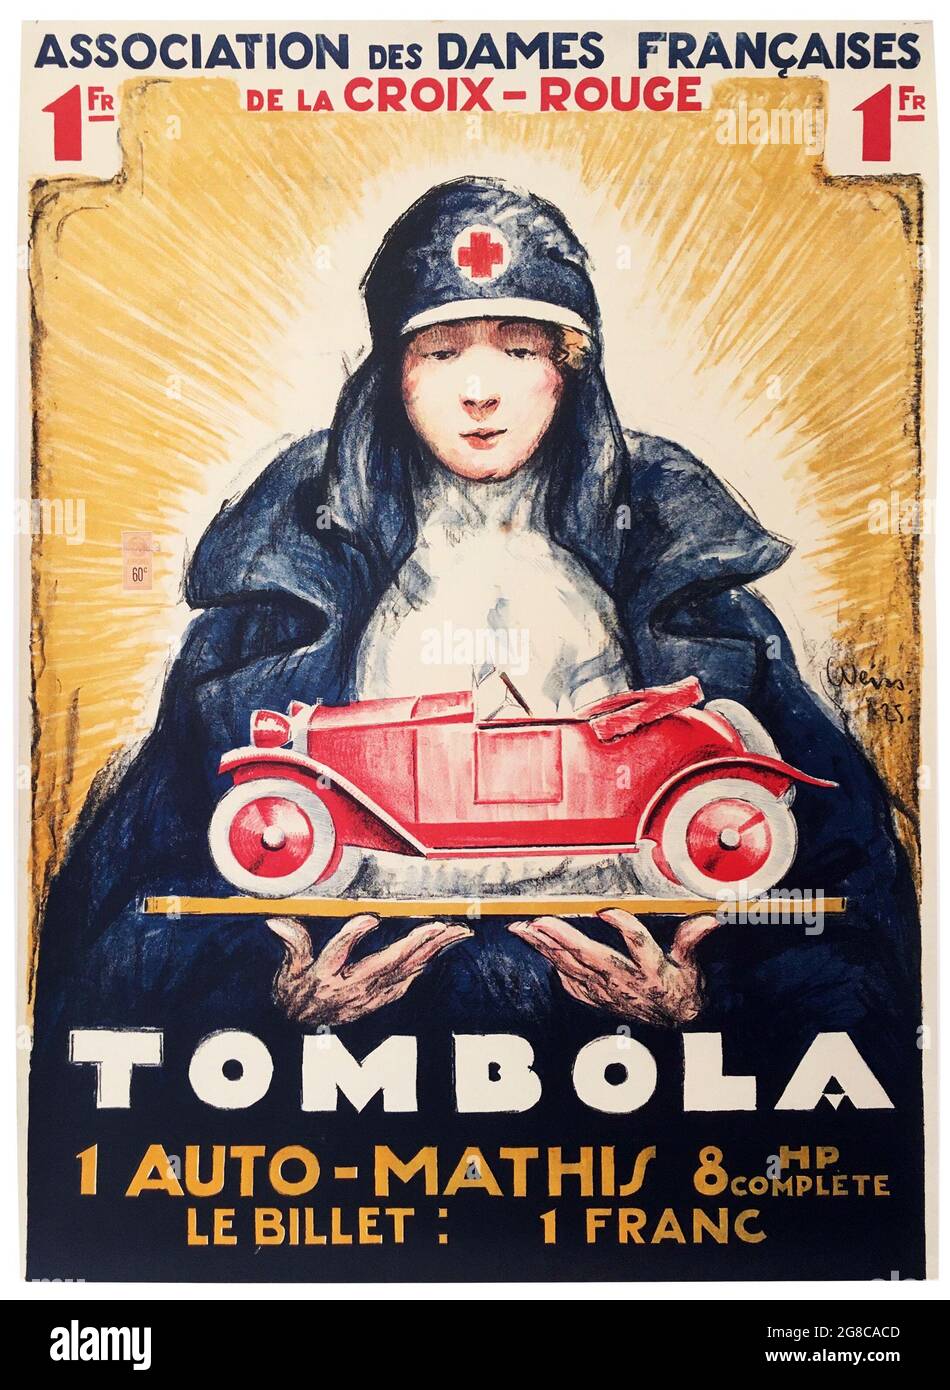 "TOMBOLA", Poster pubblicitario Art Deco francese d'epoca originale. C 1920. Foto Stock